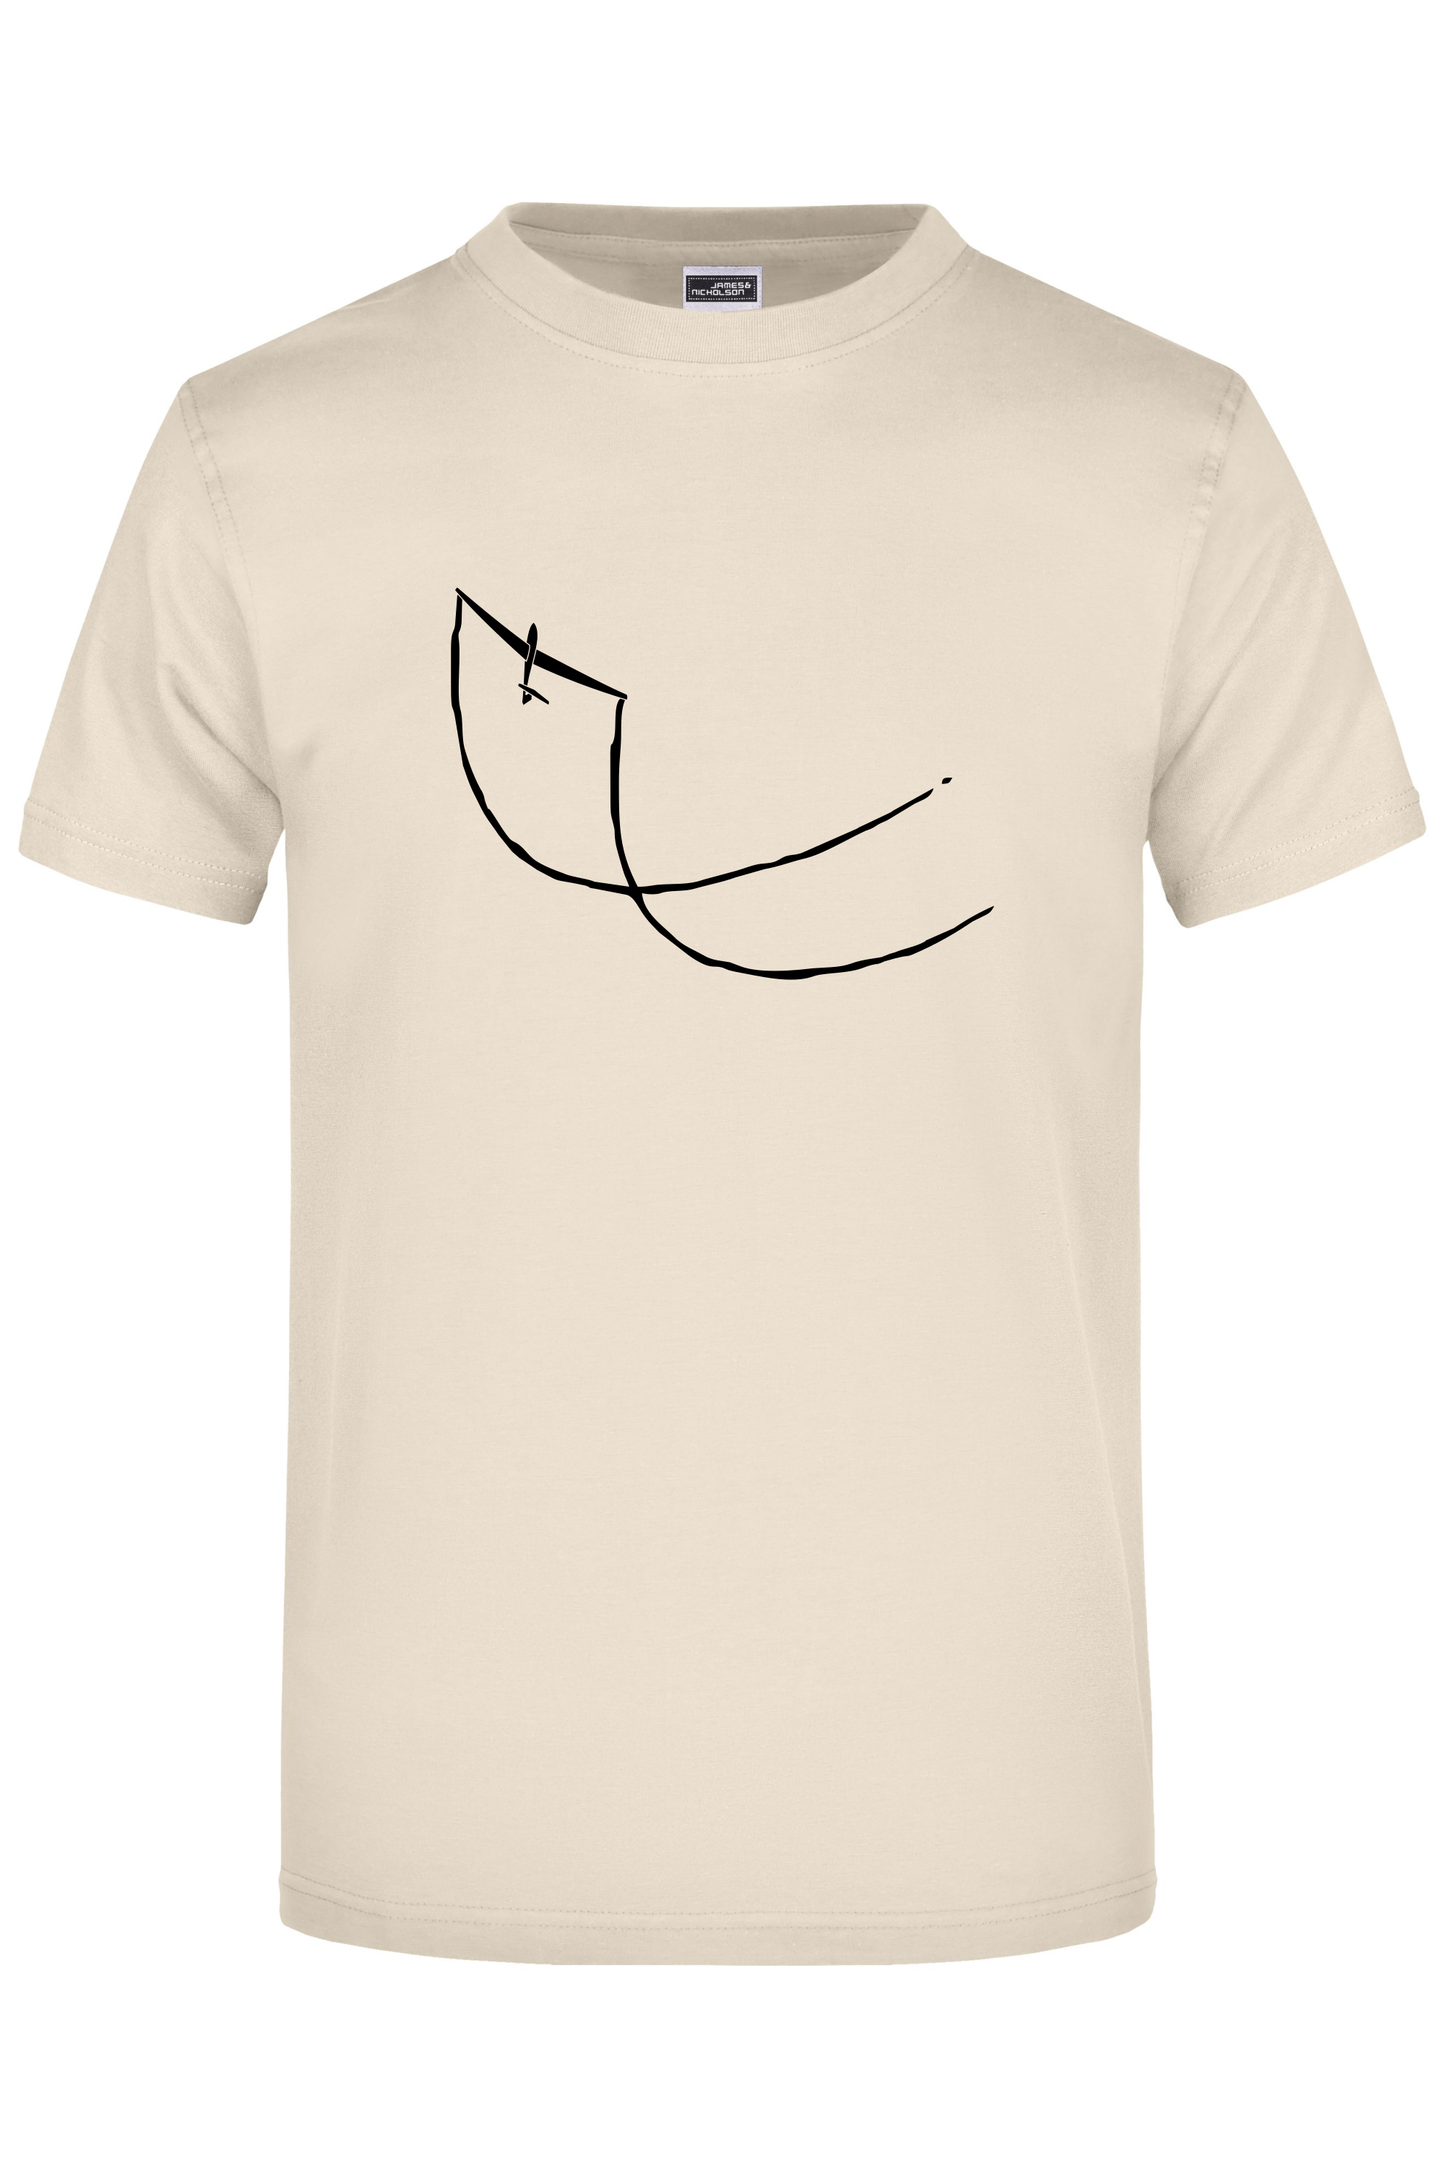 Premium T-Shirt "Kunstflug Segelflugzeug"